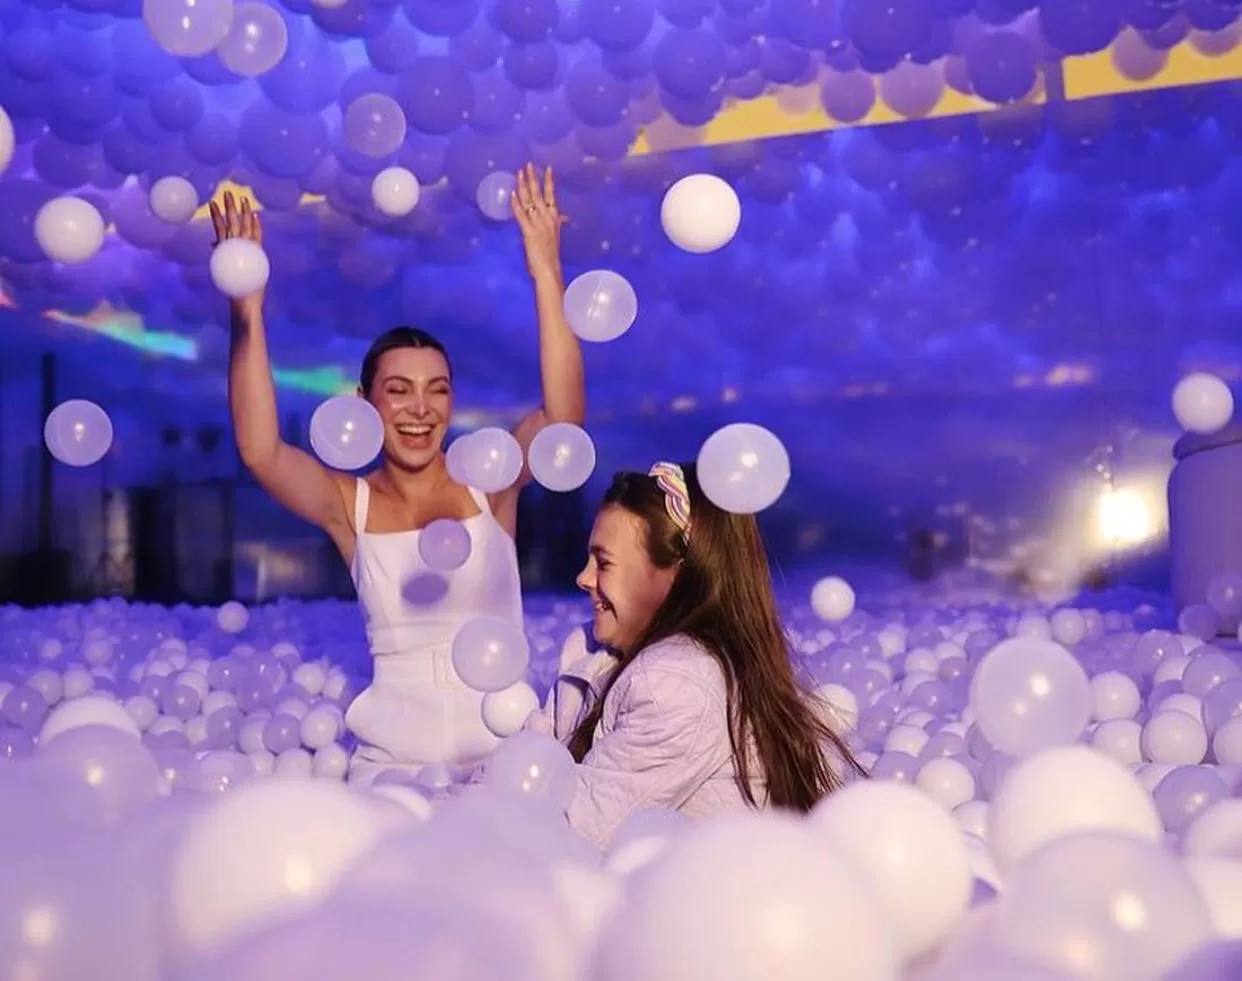 Balloon Experience chega ao Iguatemi Bosque com experiência imersiva e cenários instagramáveis